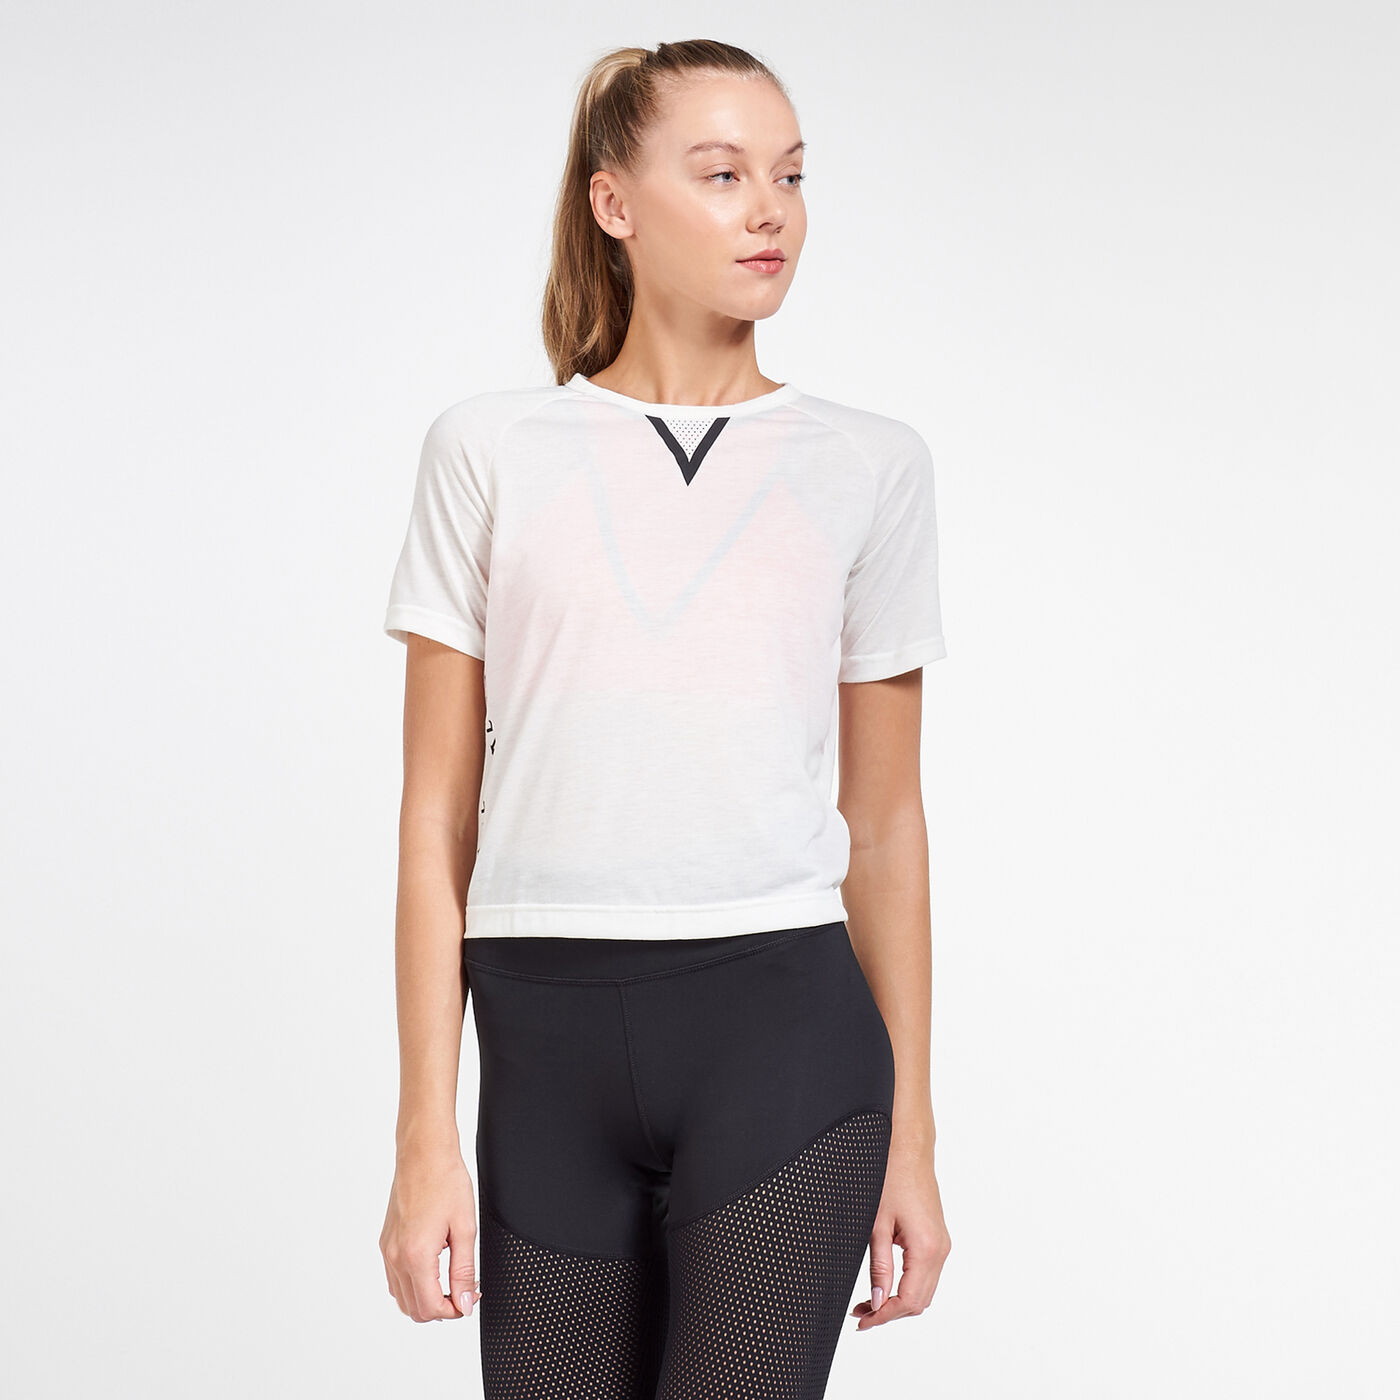 Women's Karlie Kloss AEROREADY Cropped T-Shirt